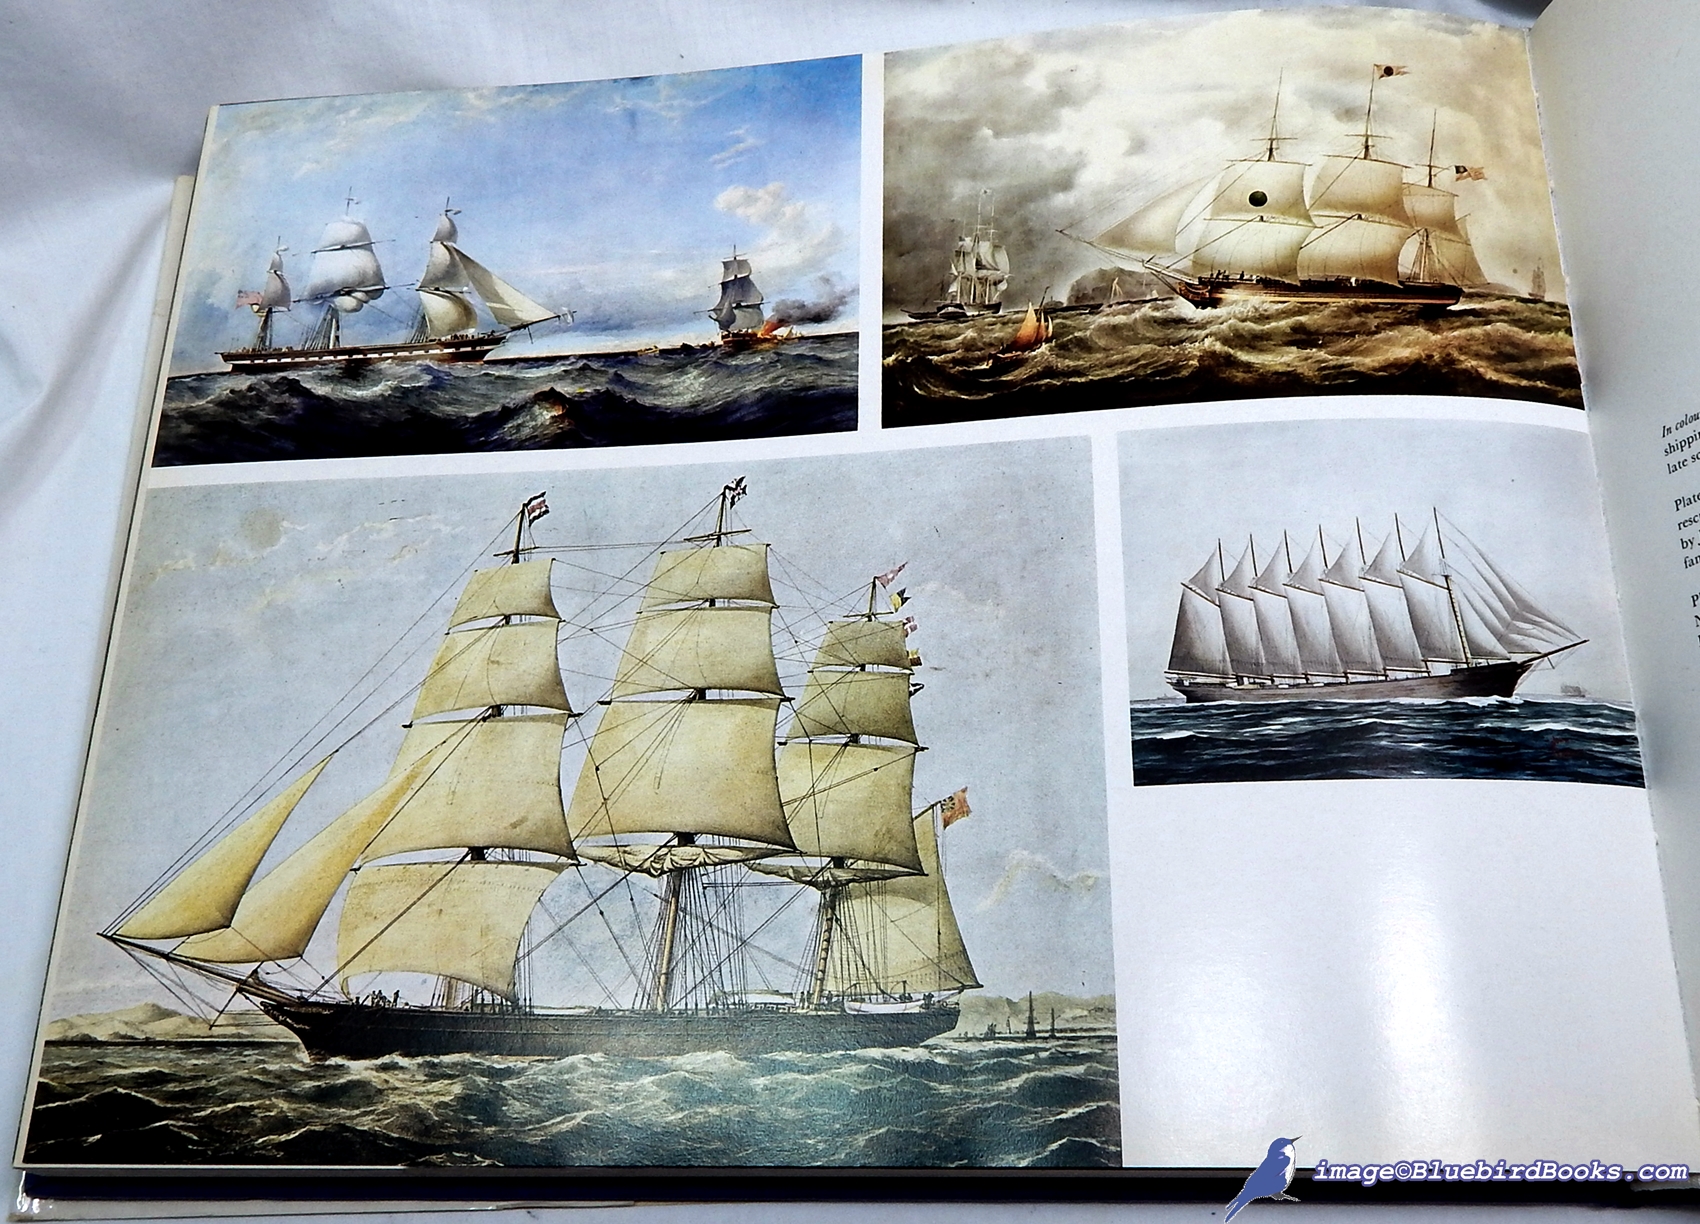 MACINTYRE, CAPTAIN DONALD - The Adventure of Sail 1520-1914